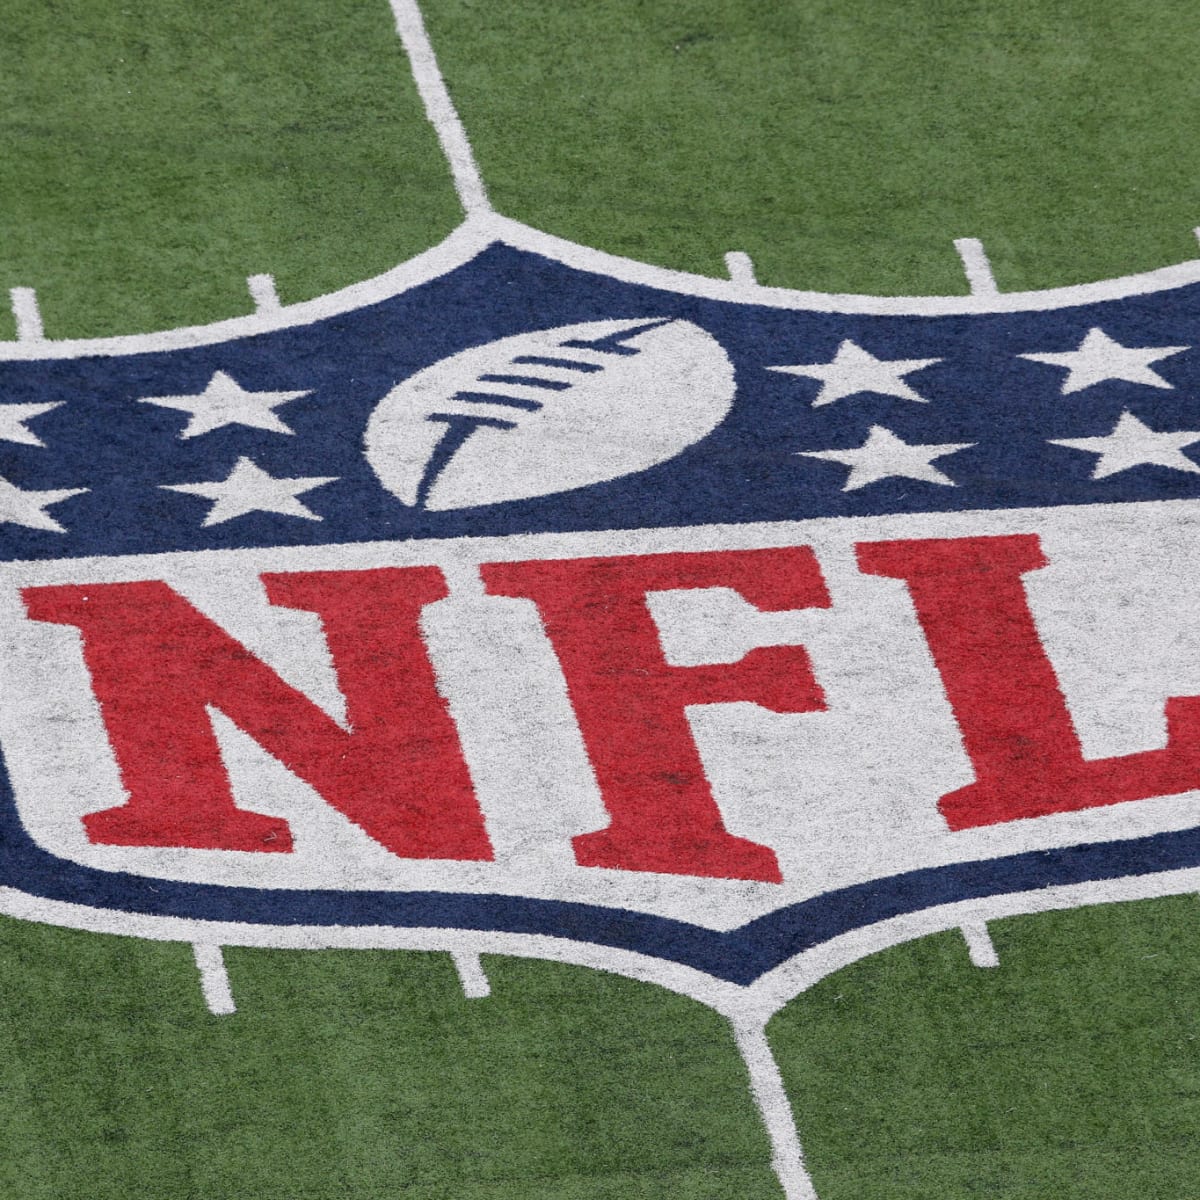 NFL,  Make Official Decision On 'Black Friday' Game 